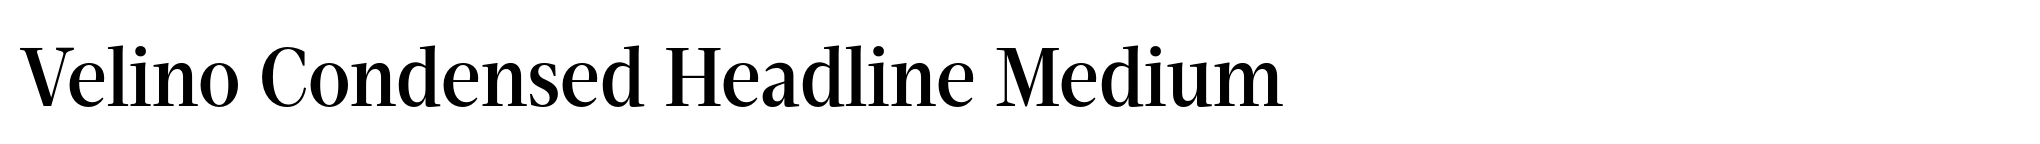 Velino Condensed Headline Medium image